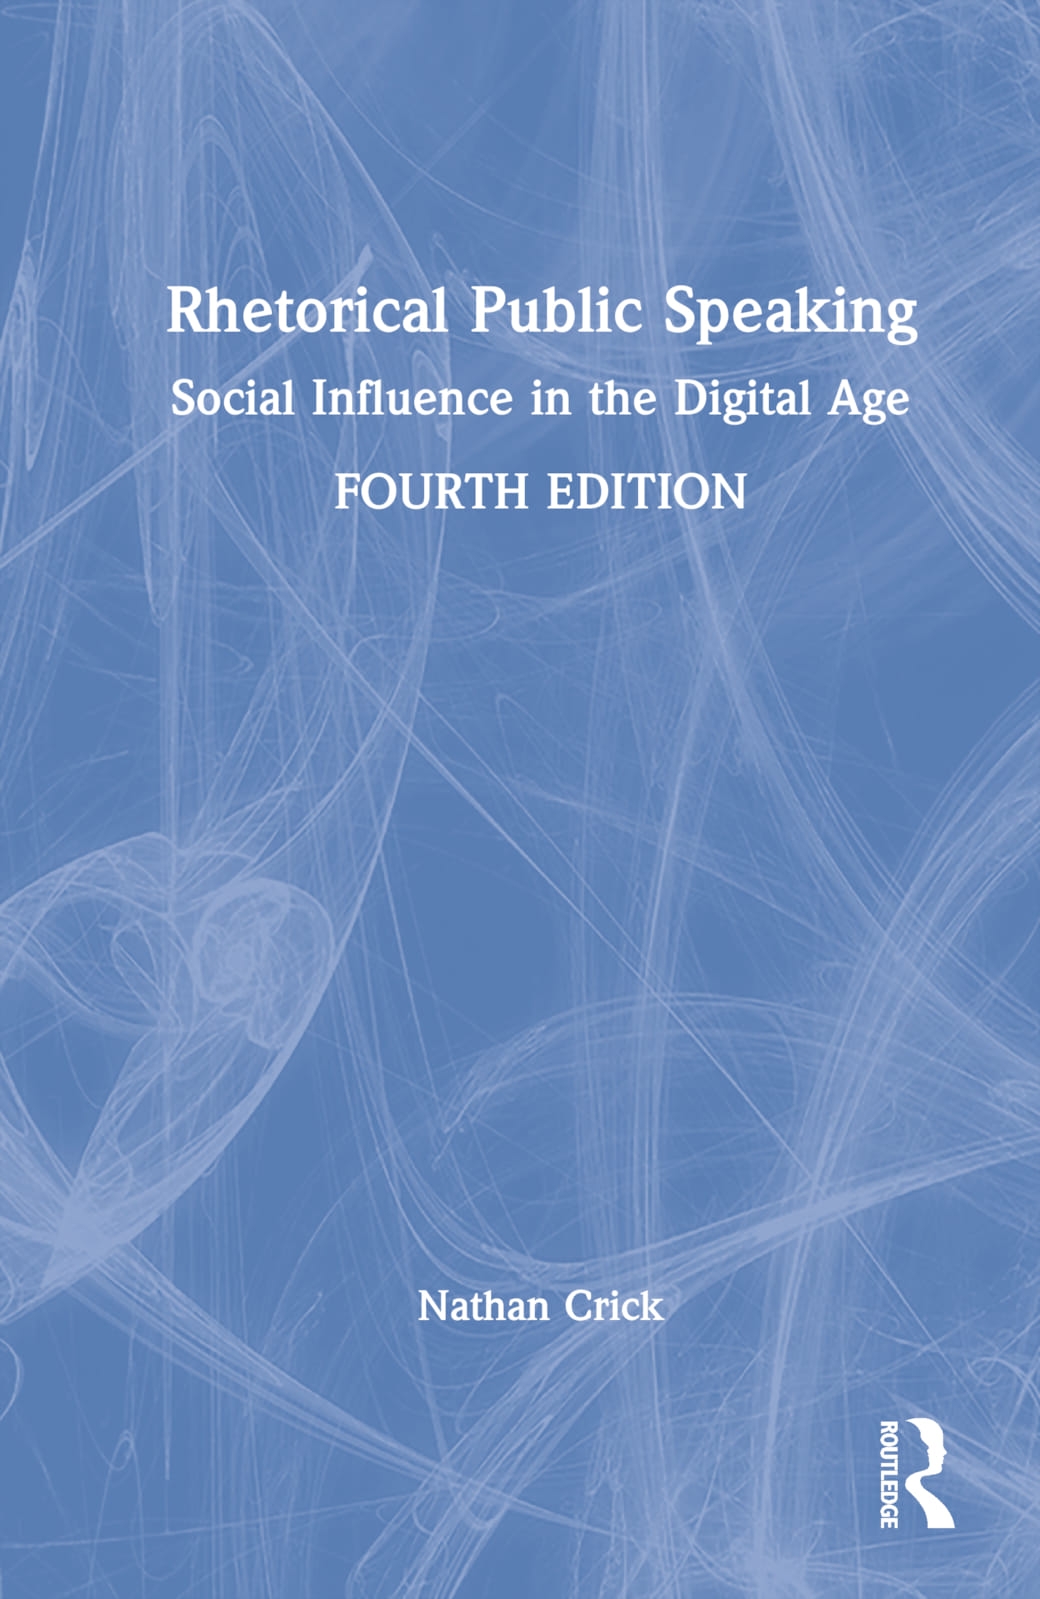 Rhetorical Public Speaking: Social Influence in the Digital Age